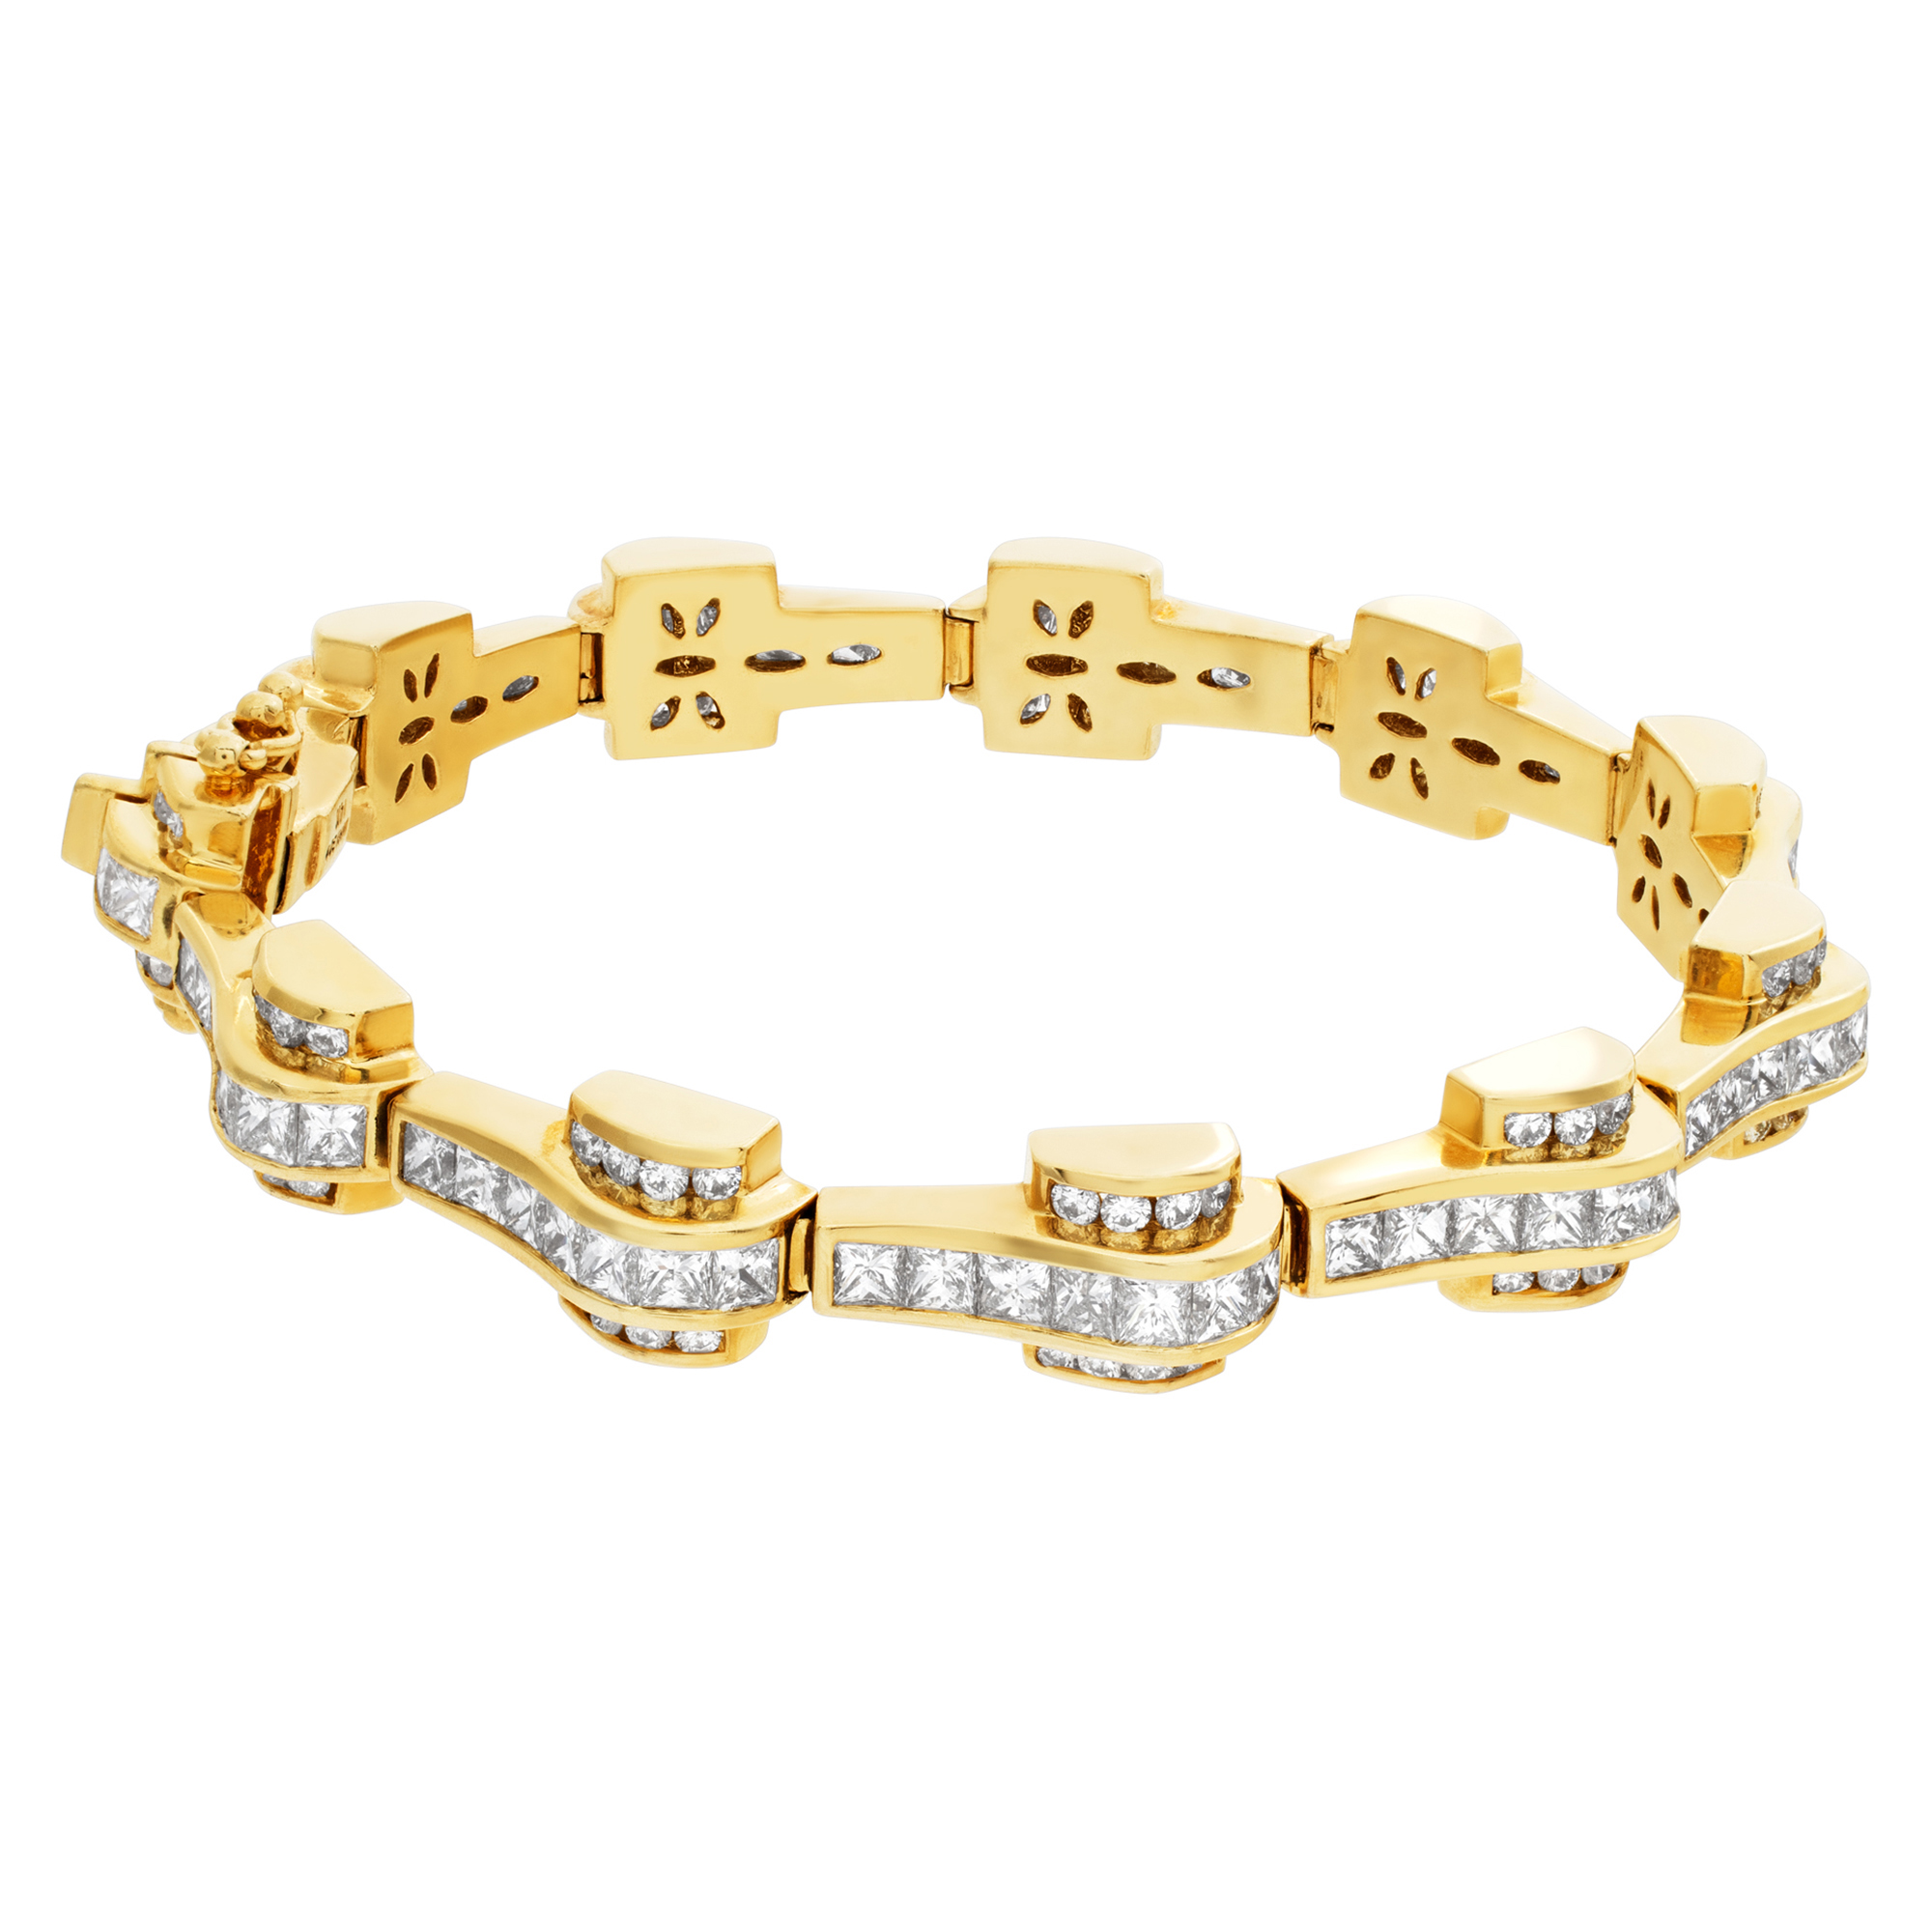 Stylish link & diamonds 14K yellow gold bracelet with over 8.25 carats princess and full cut round brilliant diamonds (Stones)